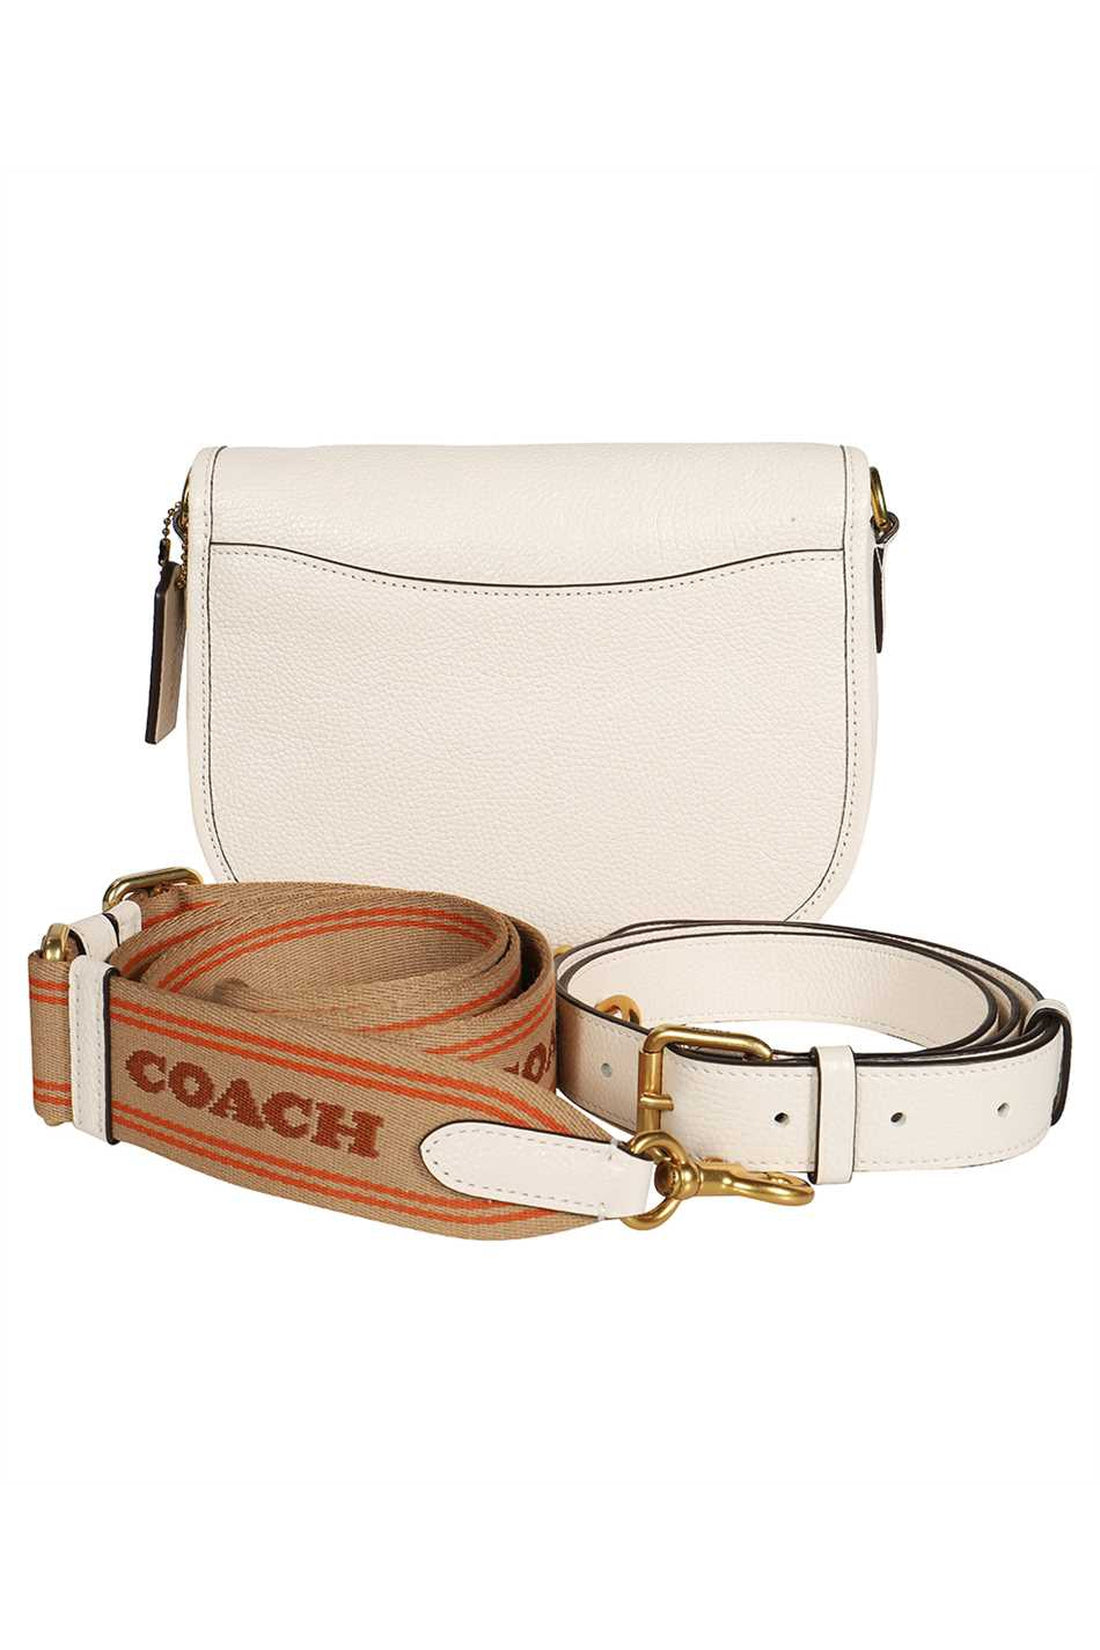 Coach-OUTLET-SALE-Willow crossbody bag-ARCHIVIST